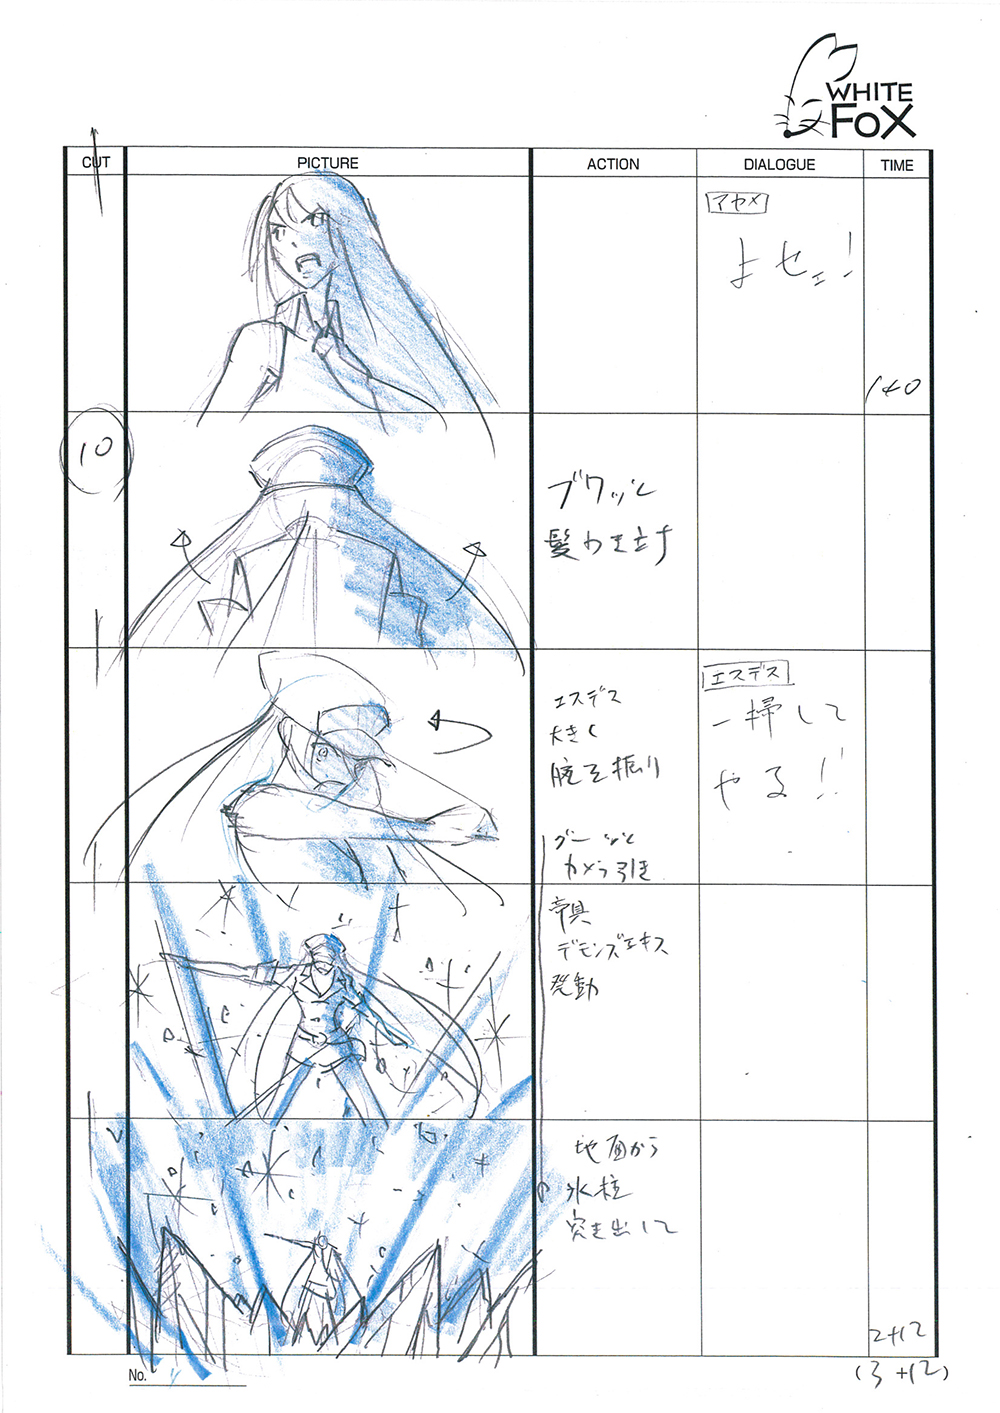 Akame ga Kill Episode 24 Storyboard Leak 006